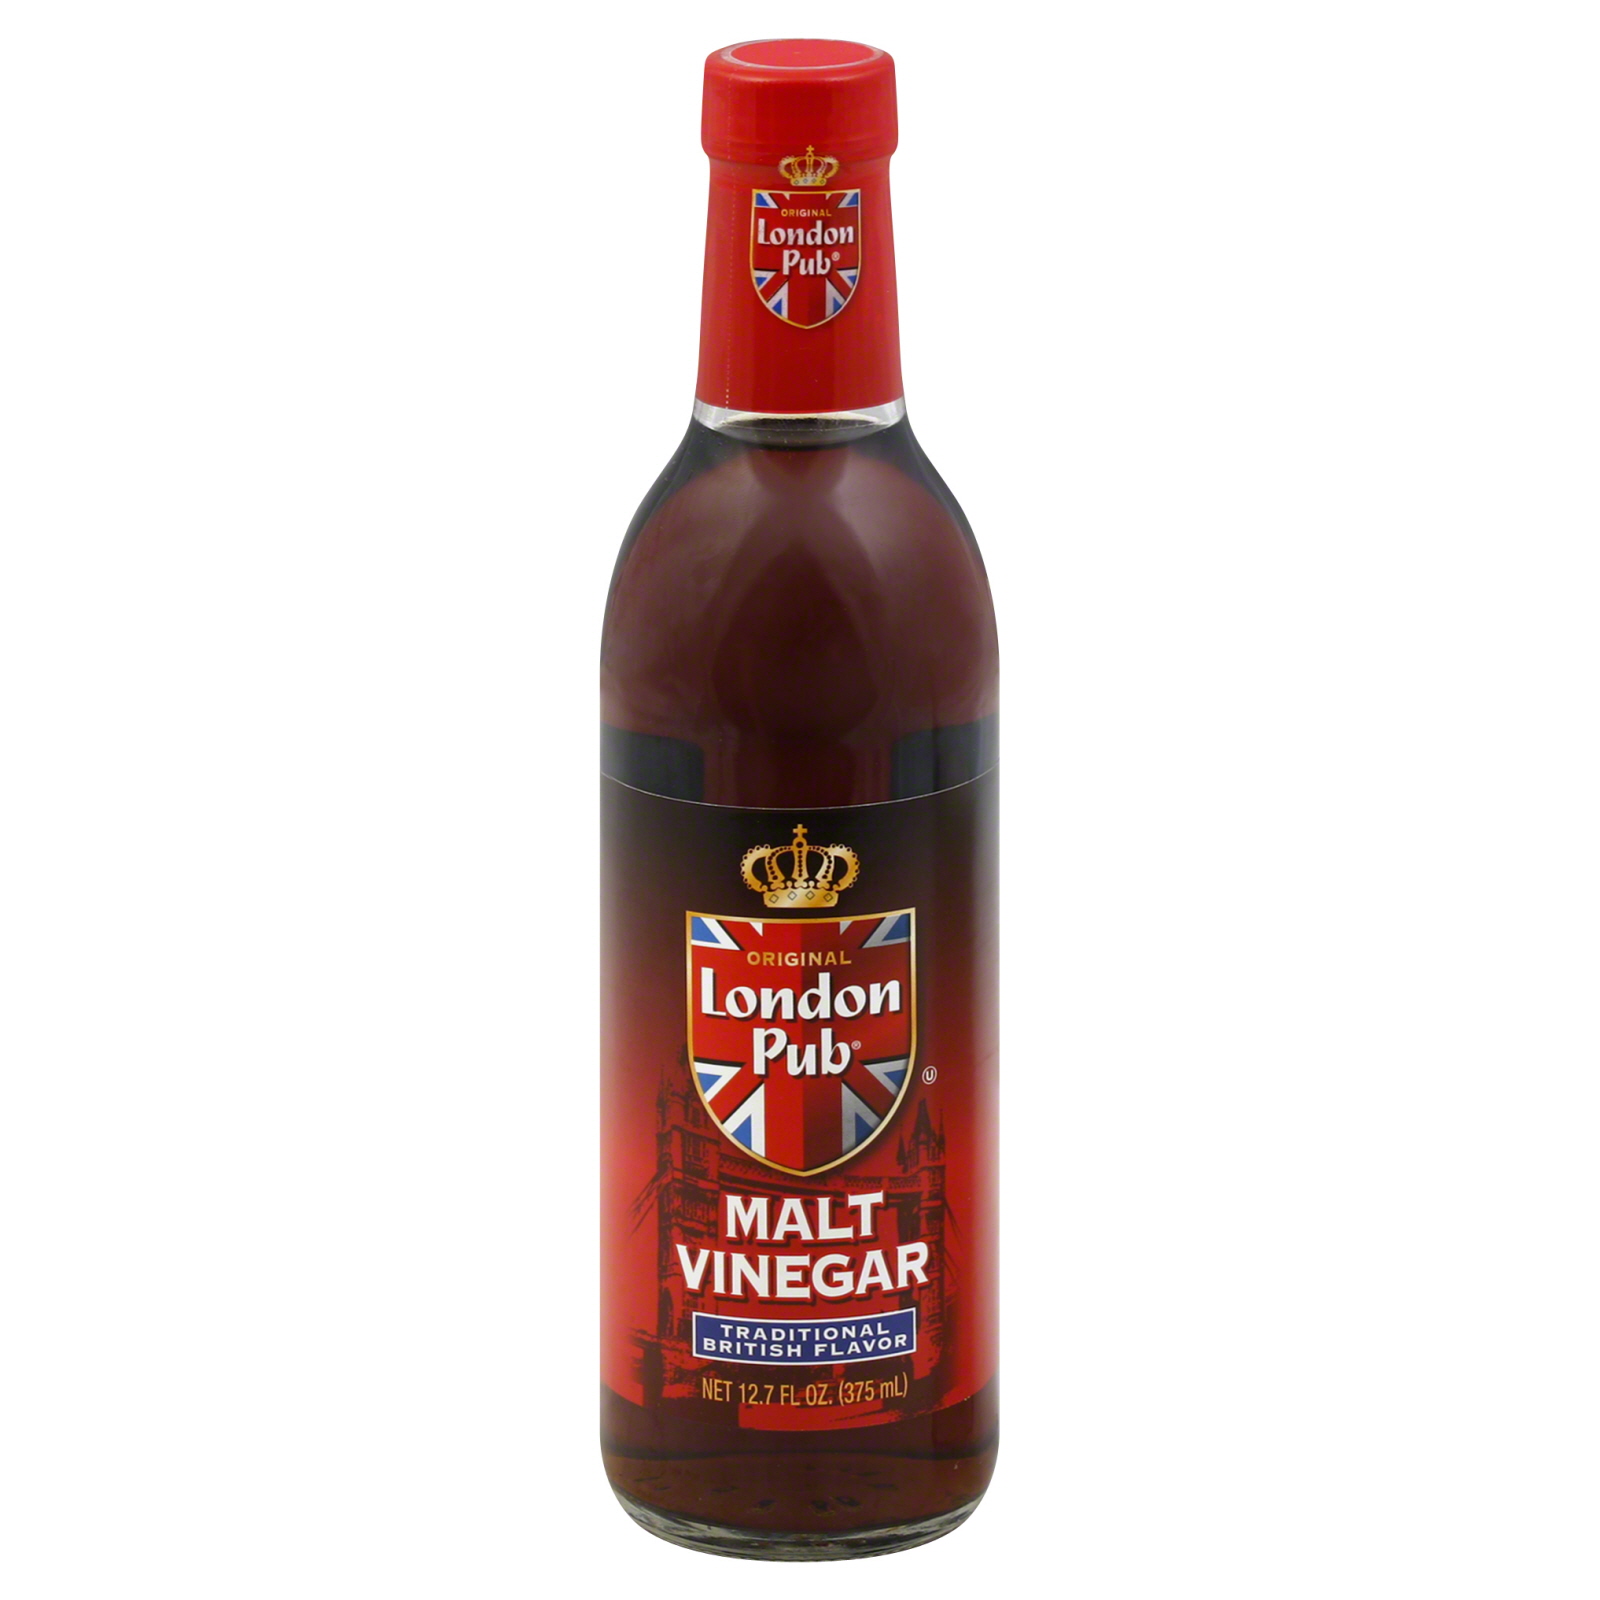 London Pub Olde English Malt Vinegar, Traditional British Flavor, 12.7 fl oz (375 ml)